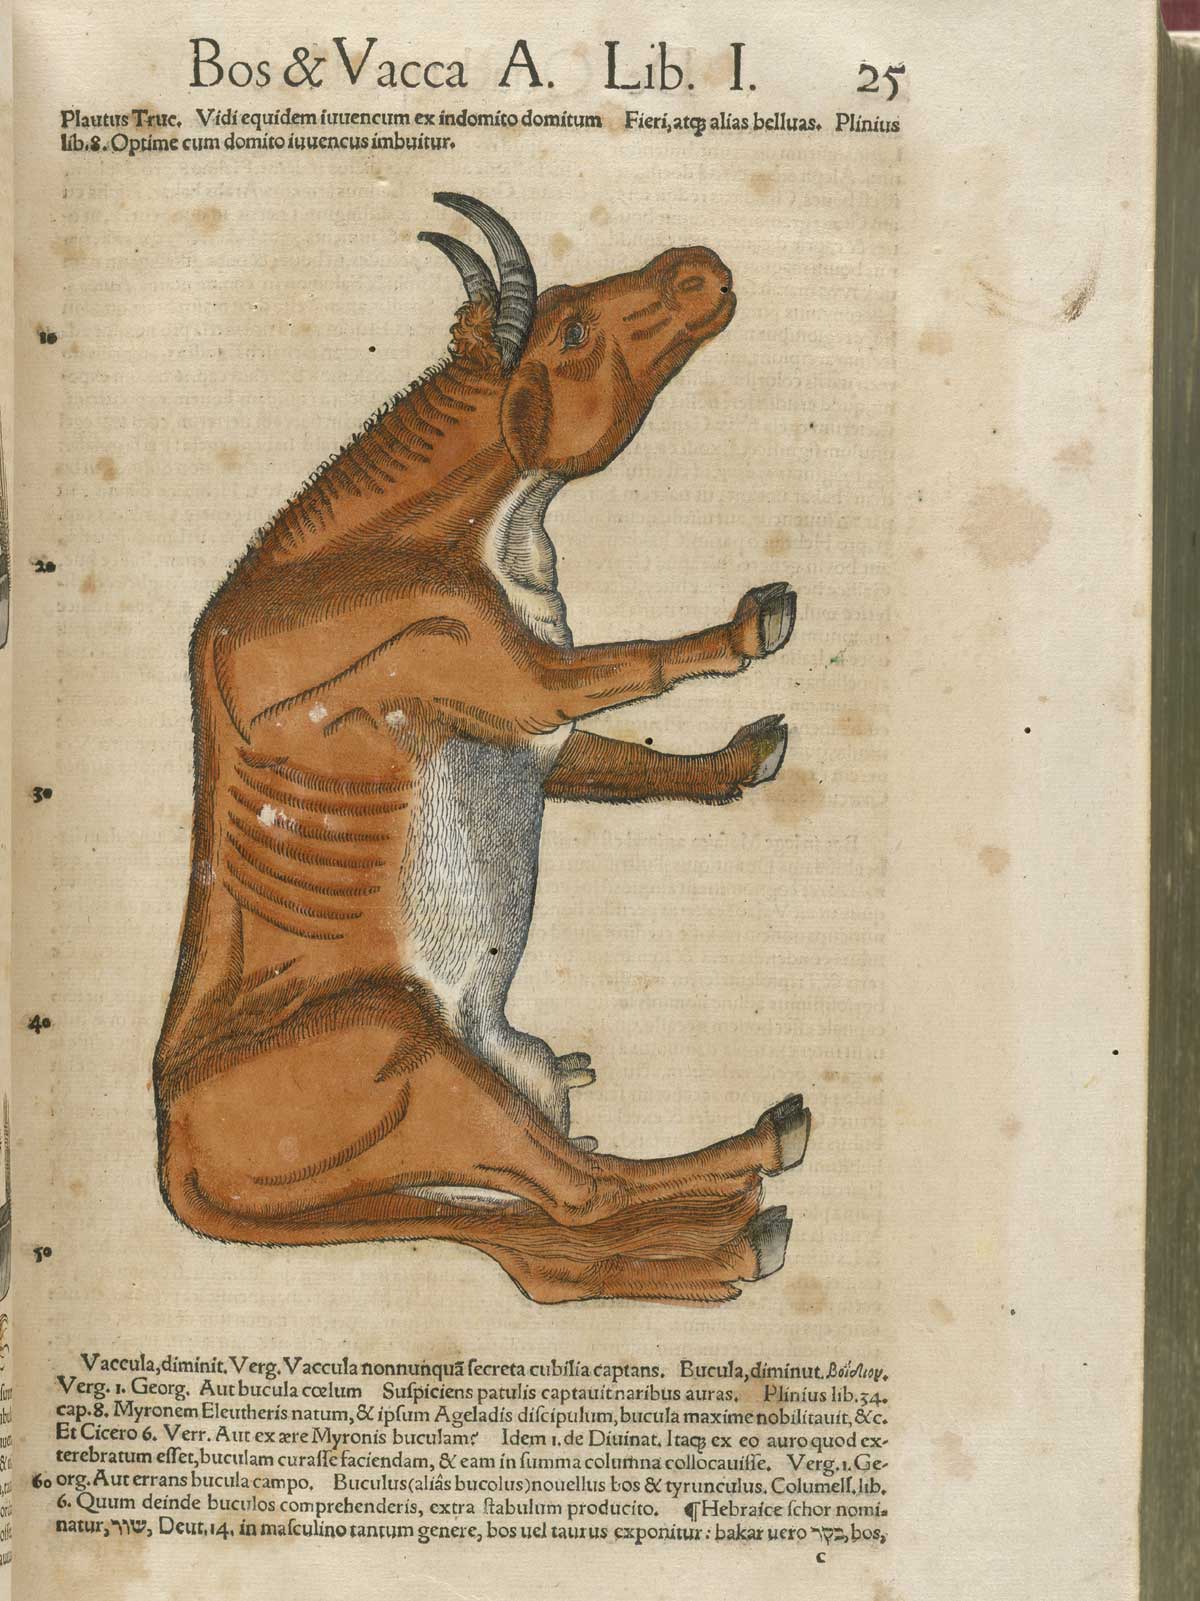 Page 25 from volume 1 of Conrad Gessner's Conradi Gesneri medici Tigurini Historiae animalium, featuring the colored woodcut of a cow.